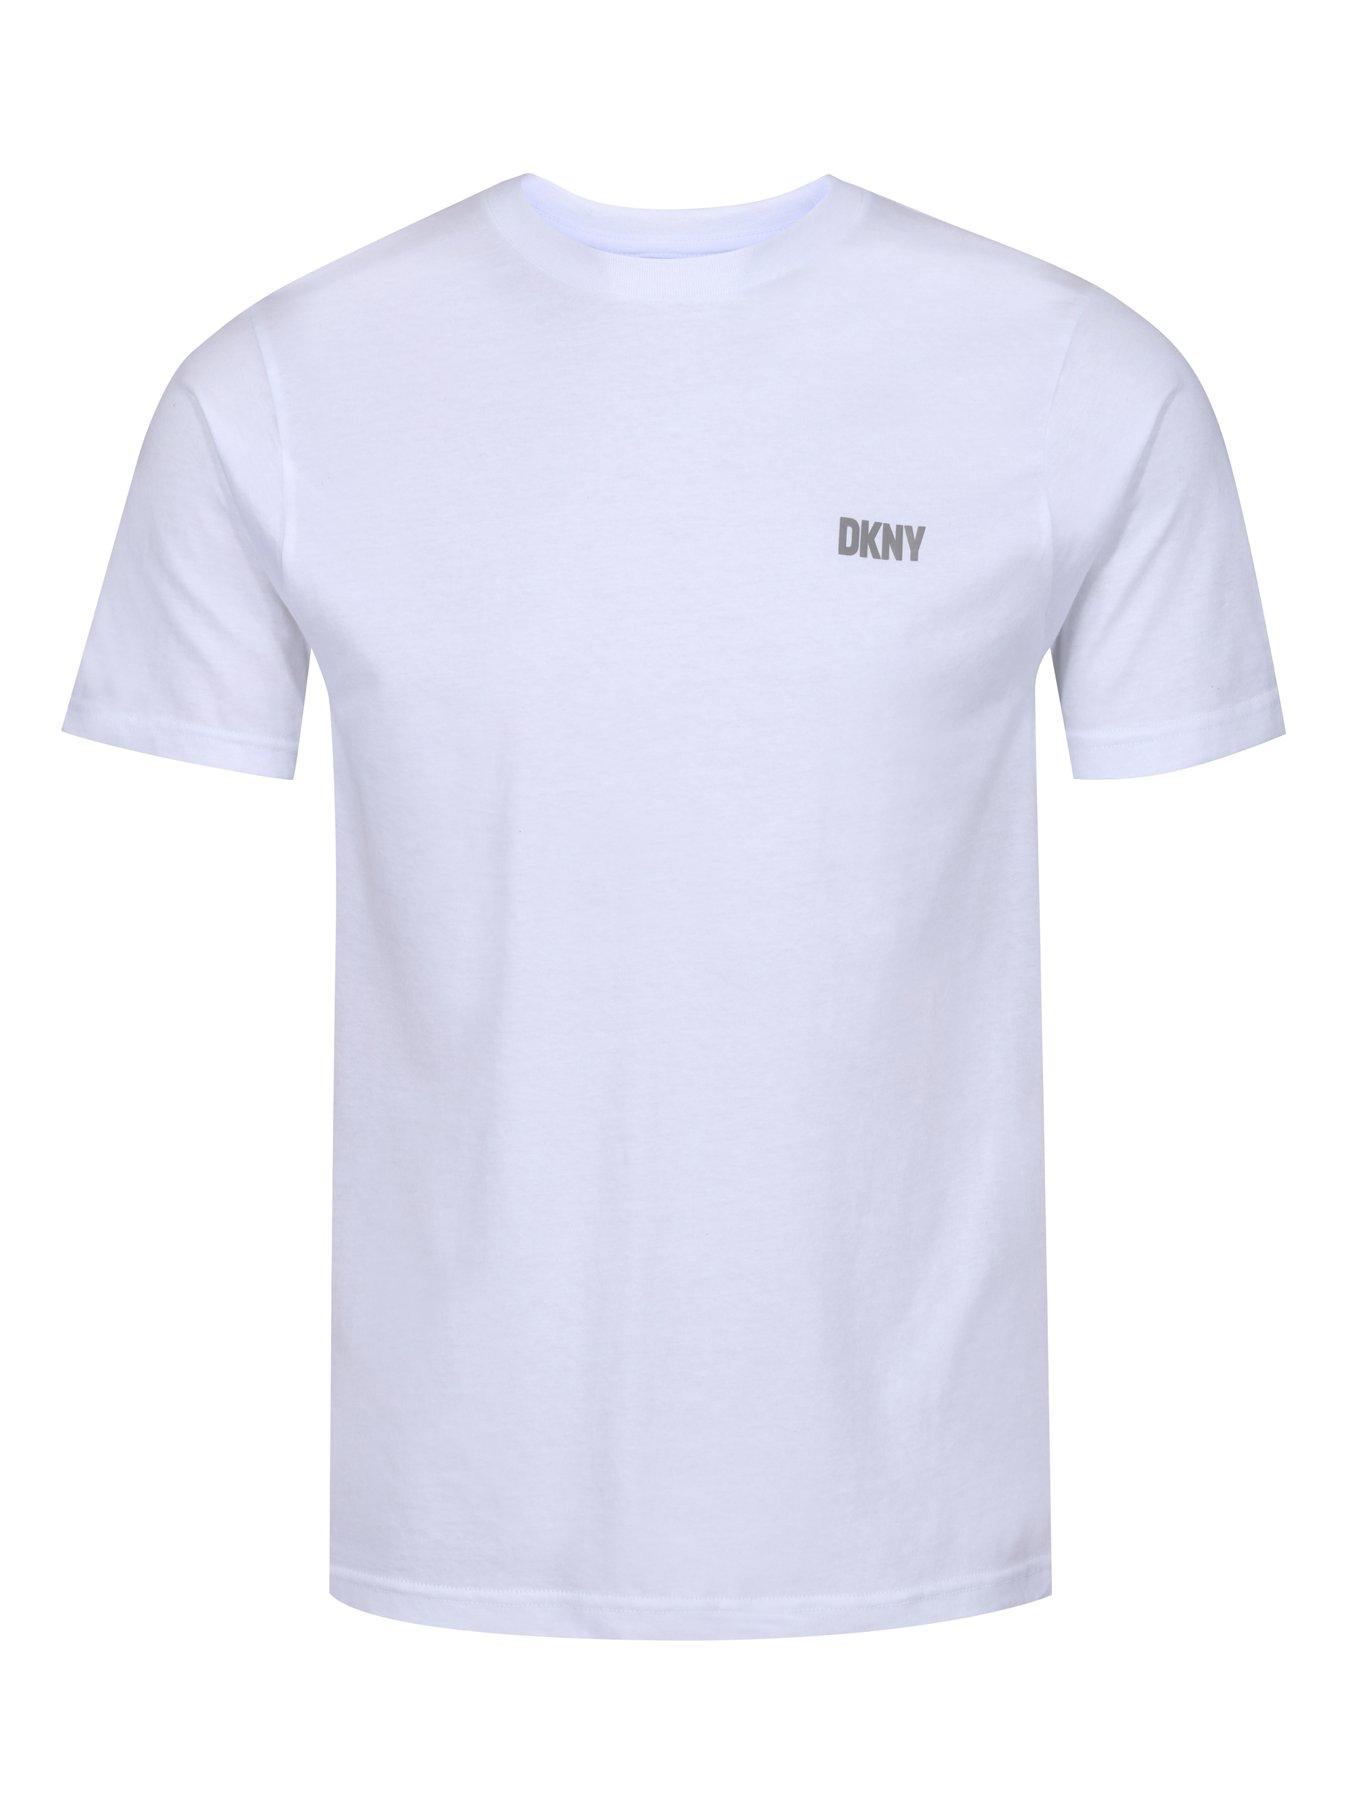 DKNY Giants 3 Pack T-shirt Multi 